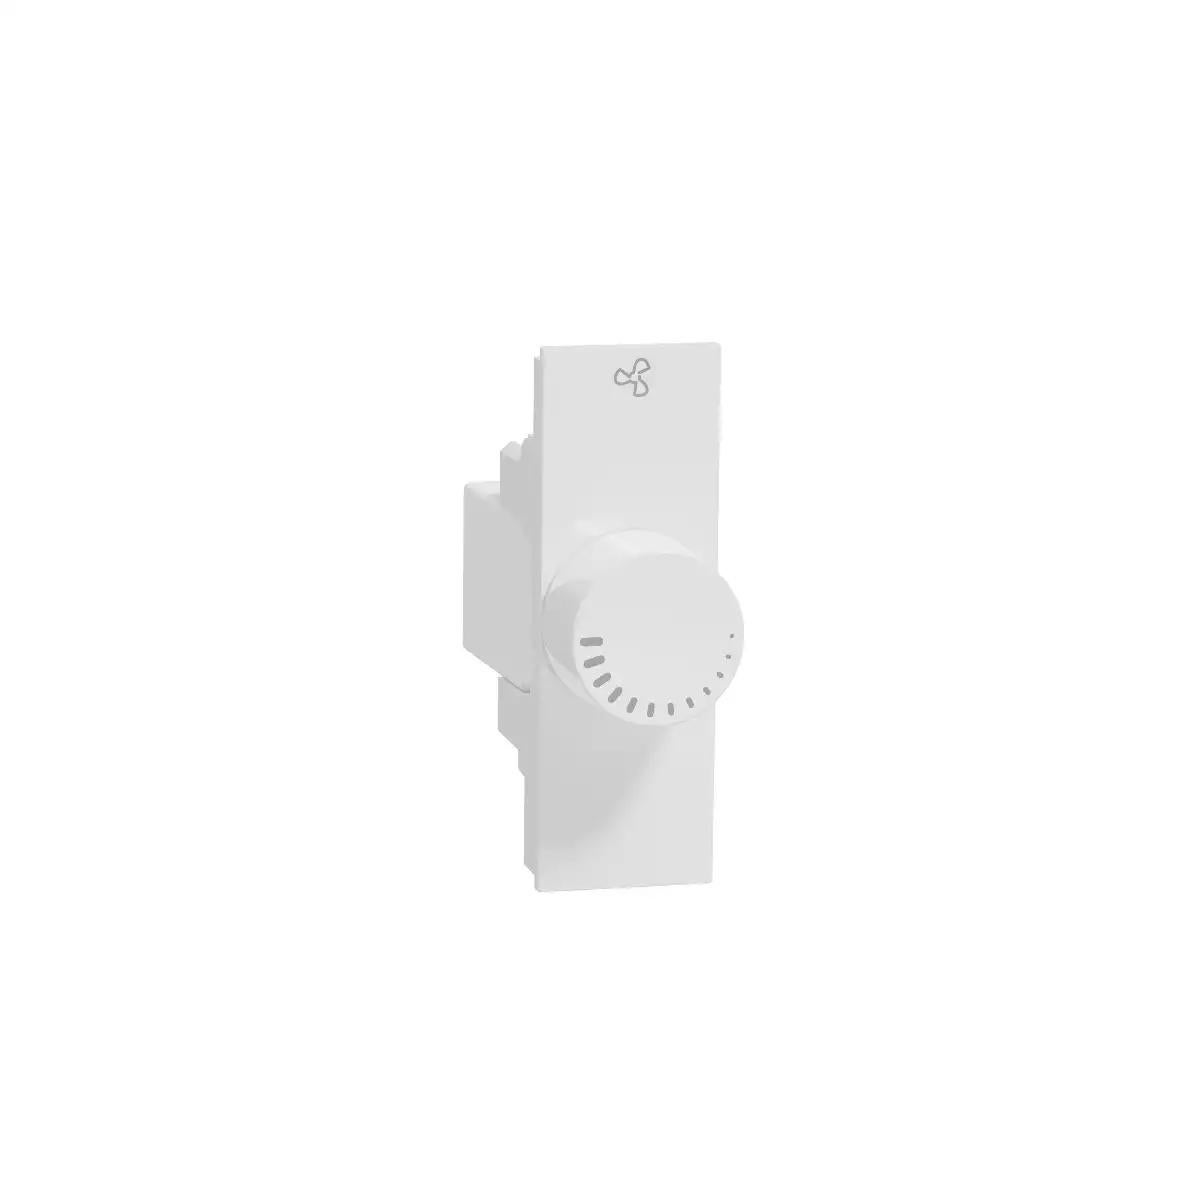 Fan Regulator, AvatarOn A, rotary knob, White